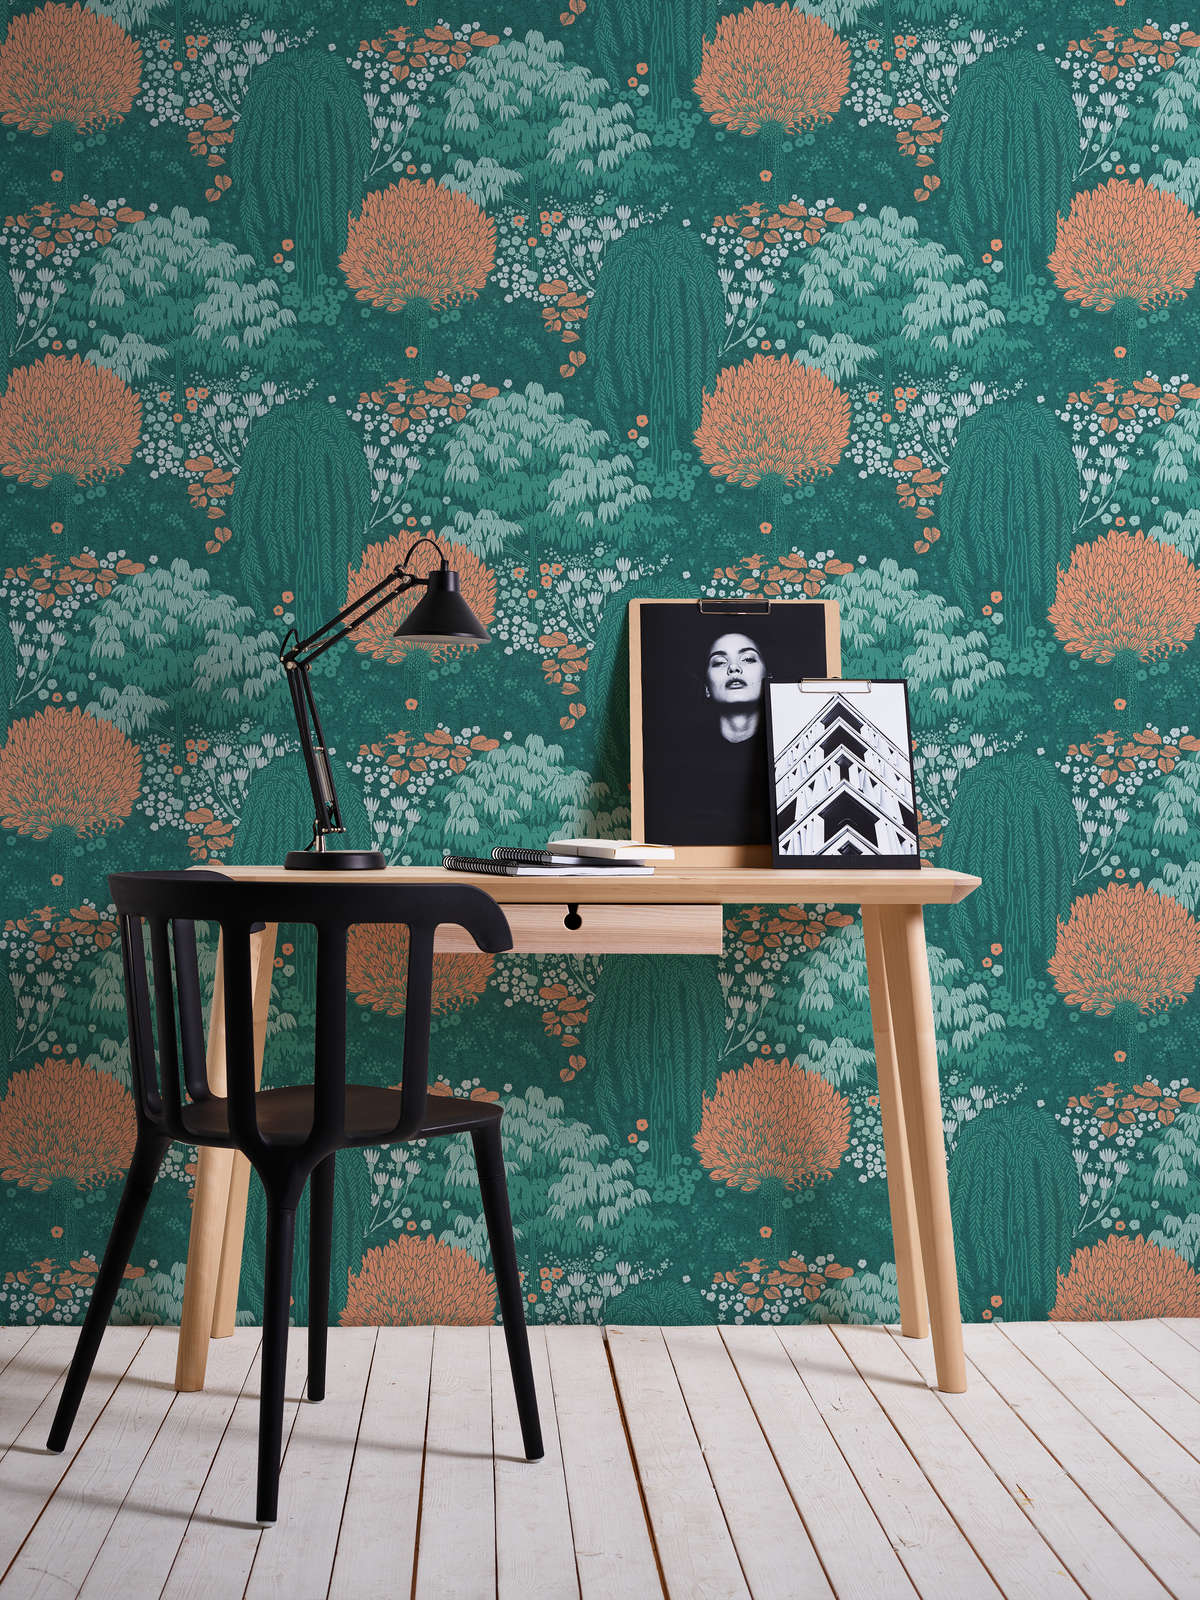             Floral wallpaper with leaves light textured, matt - petrol, orange, green
        